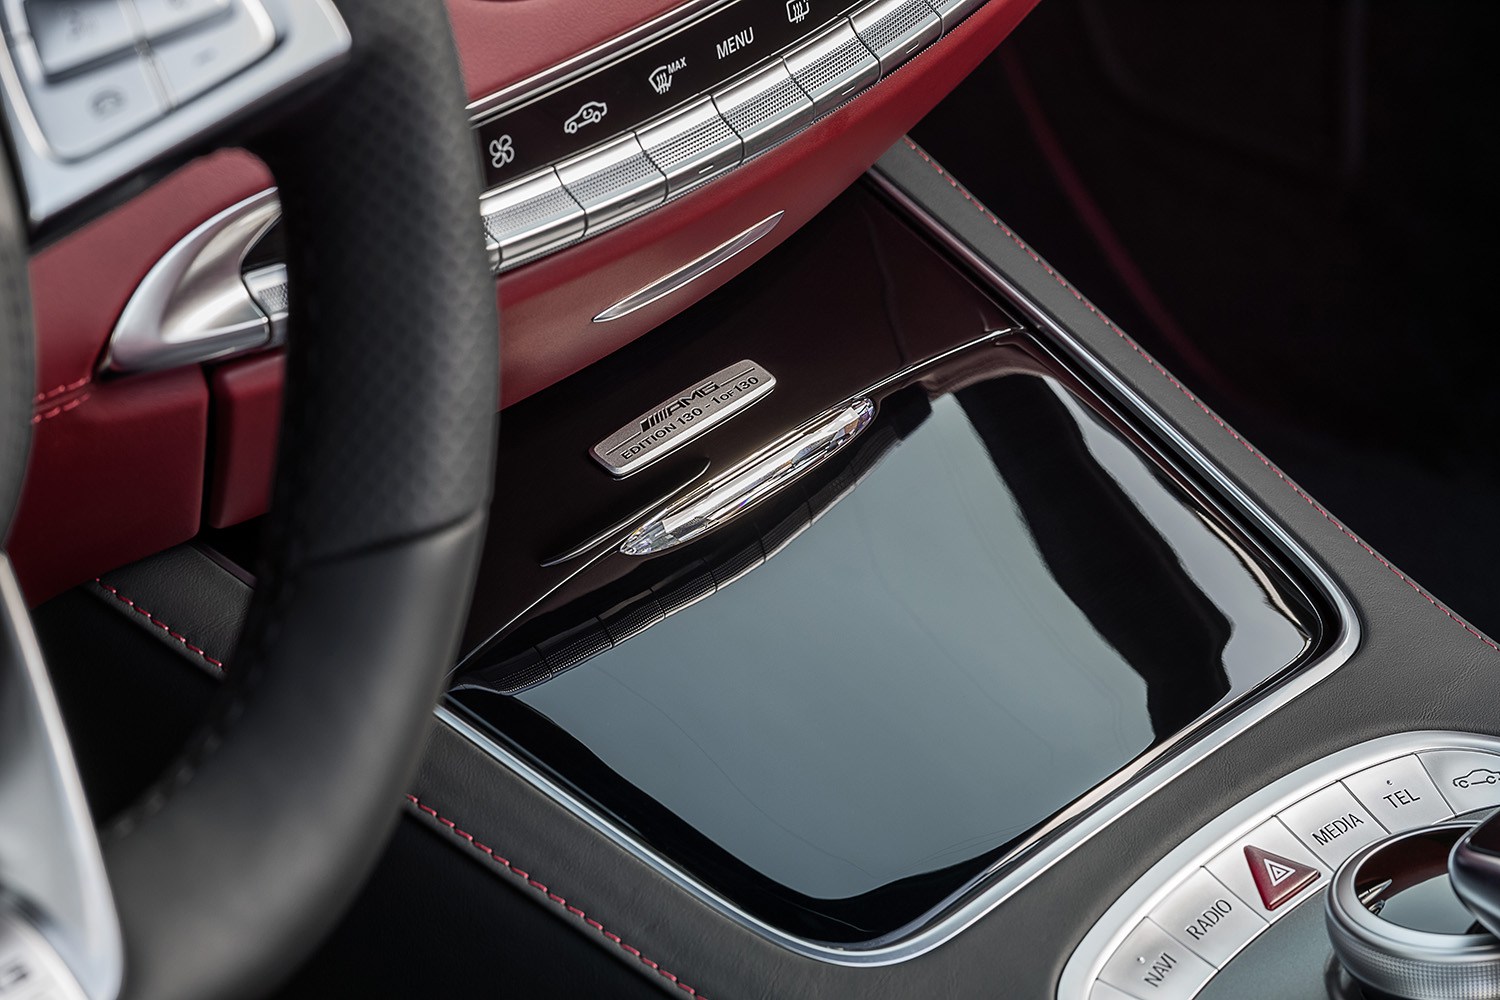 Mercedes-AMG S 63 4MATIC Cabriolet "Edition 130" (Fuel consumption combined: 10.4 l /100 km; combined CO2 emissions: 244 g/km; Kraftstoffverbrauch kombiniert: 10,4 l/100 km; CO2-Emissionen kombiniert: 244 g/km) Interieur: designo Exclusive Leder Nappa bengalrot/schwarz interior: designo exclusive leather nappa bengal red/black Zierteile: AMG Zierteile Carbon/ Klavierlack schwarz trim parts: AMG carbon-fibre / black piano lacquer